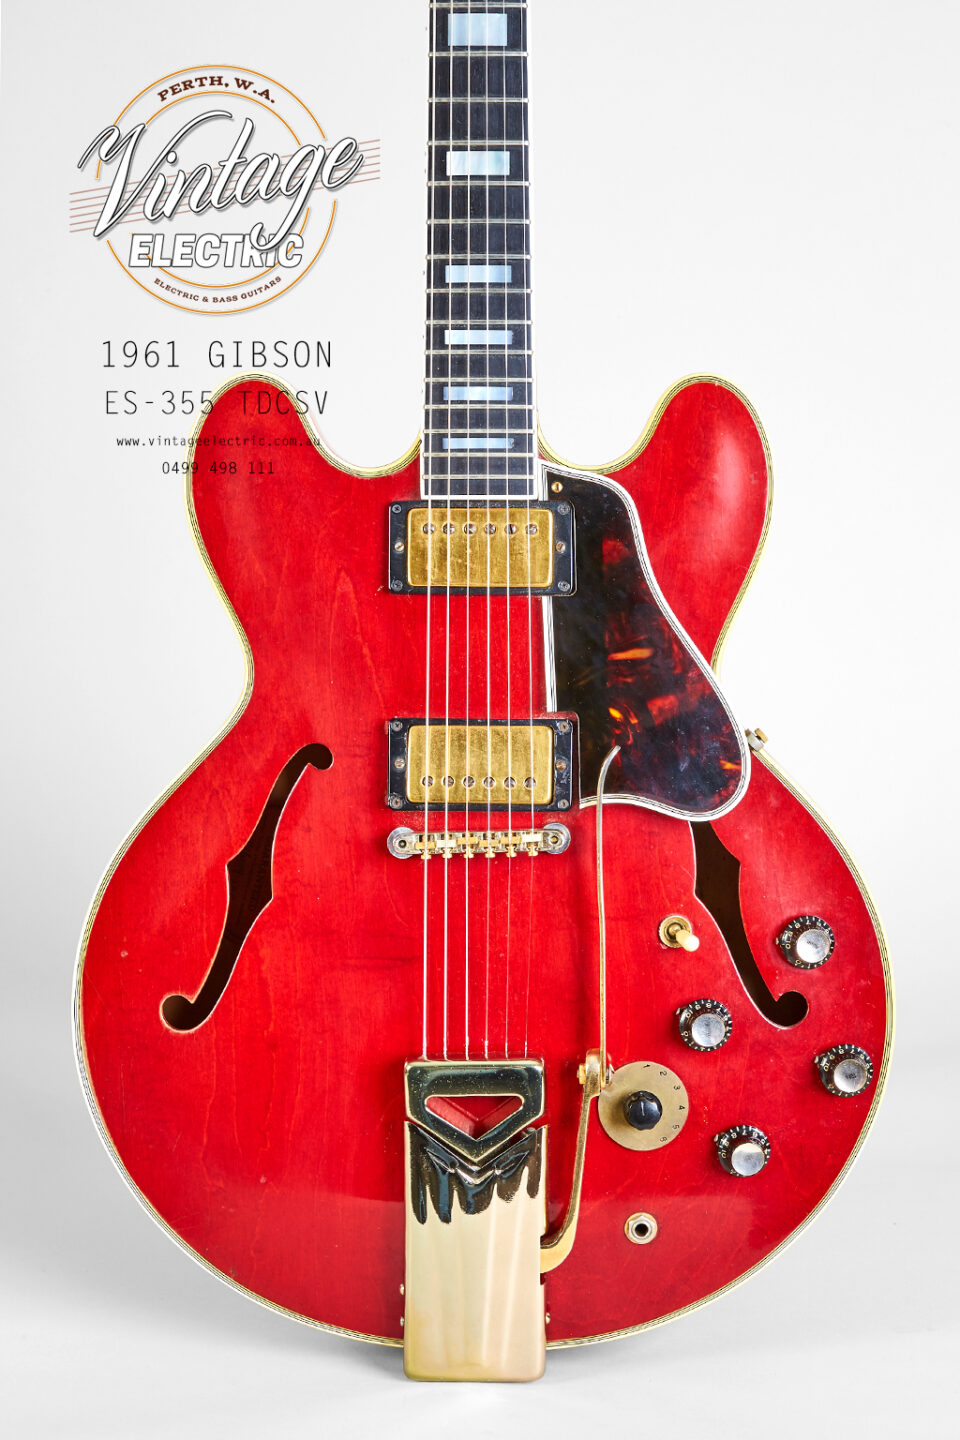 1961 Gibson ES-355 TDCSV Body